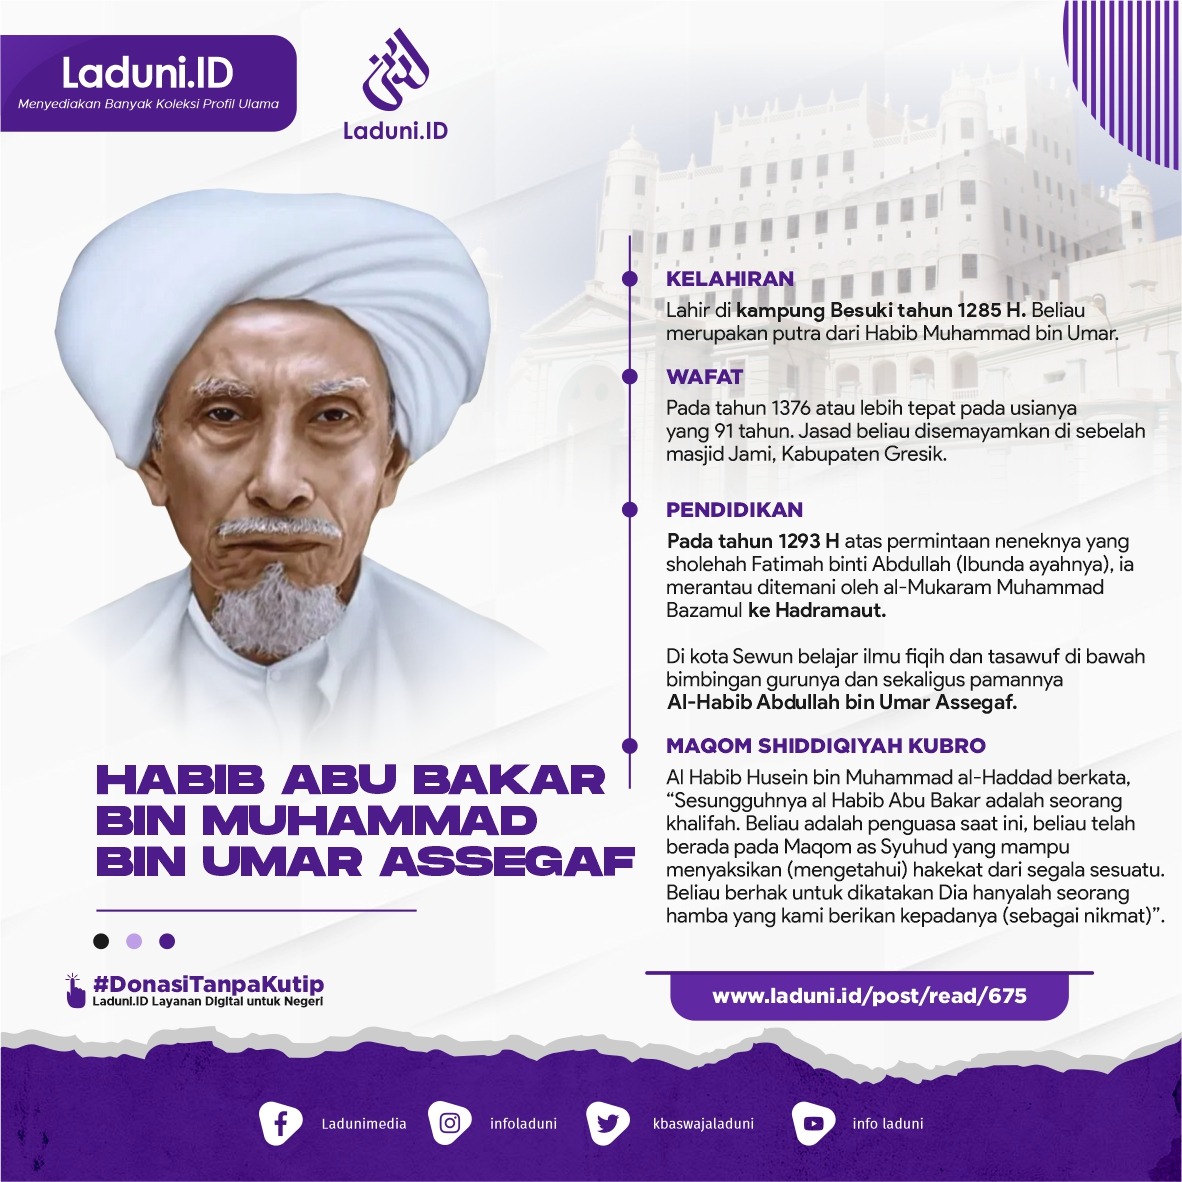 Biografi Habib Abu Bakar bin Muhammad bin Umar Assegaf (Habib Abu Bakar Gresik)